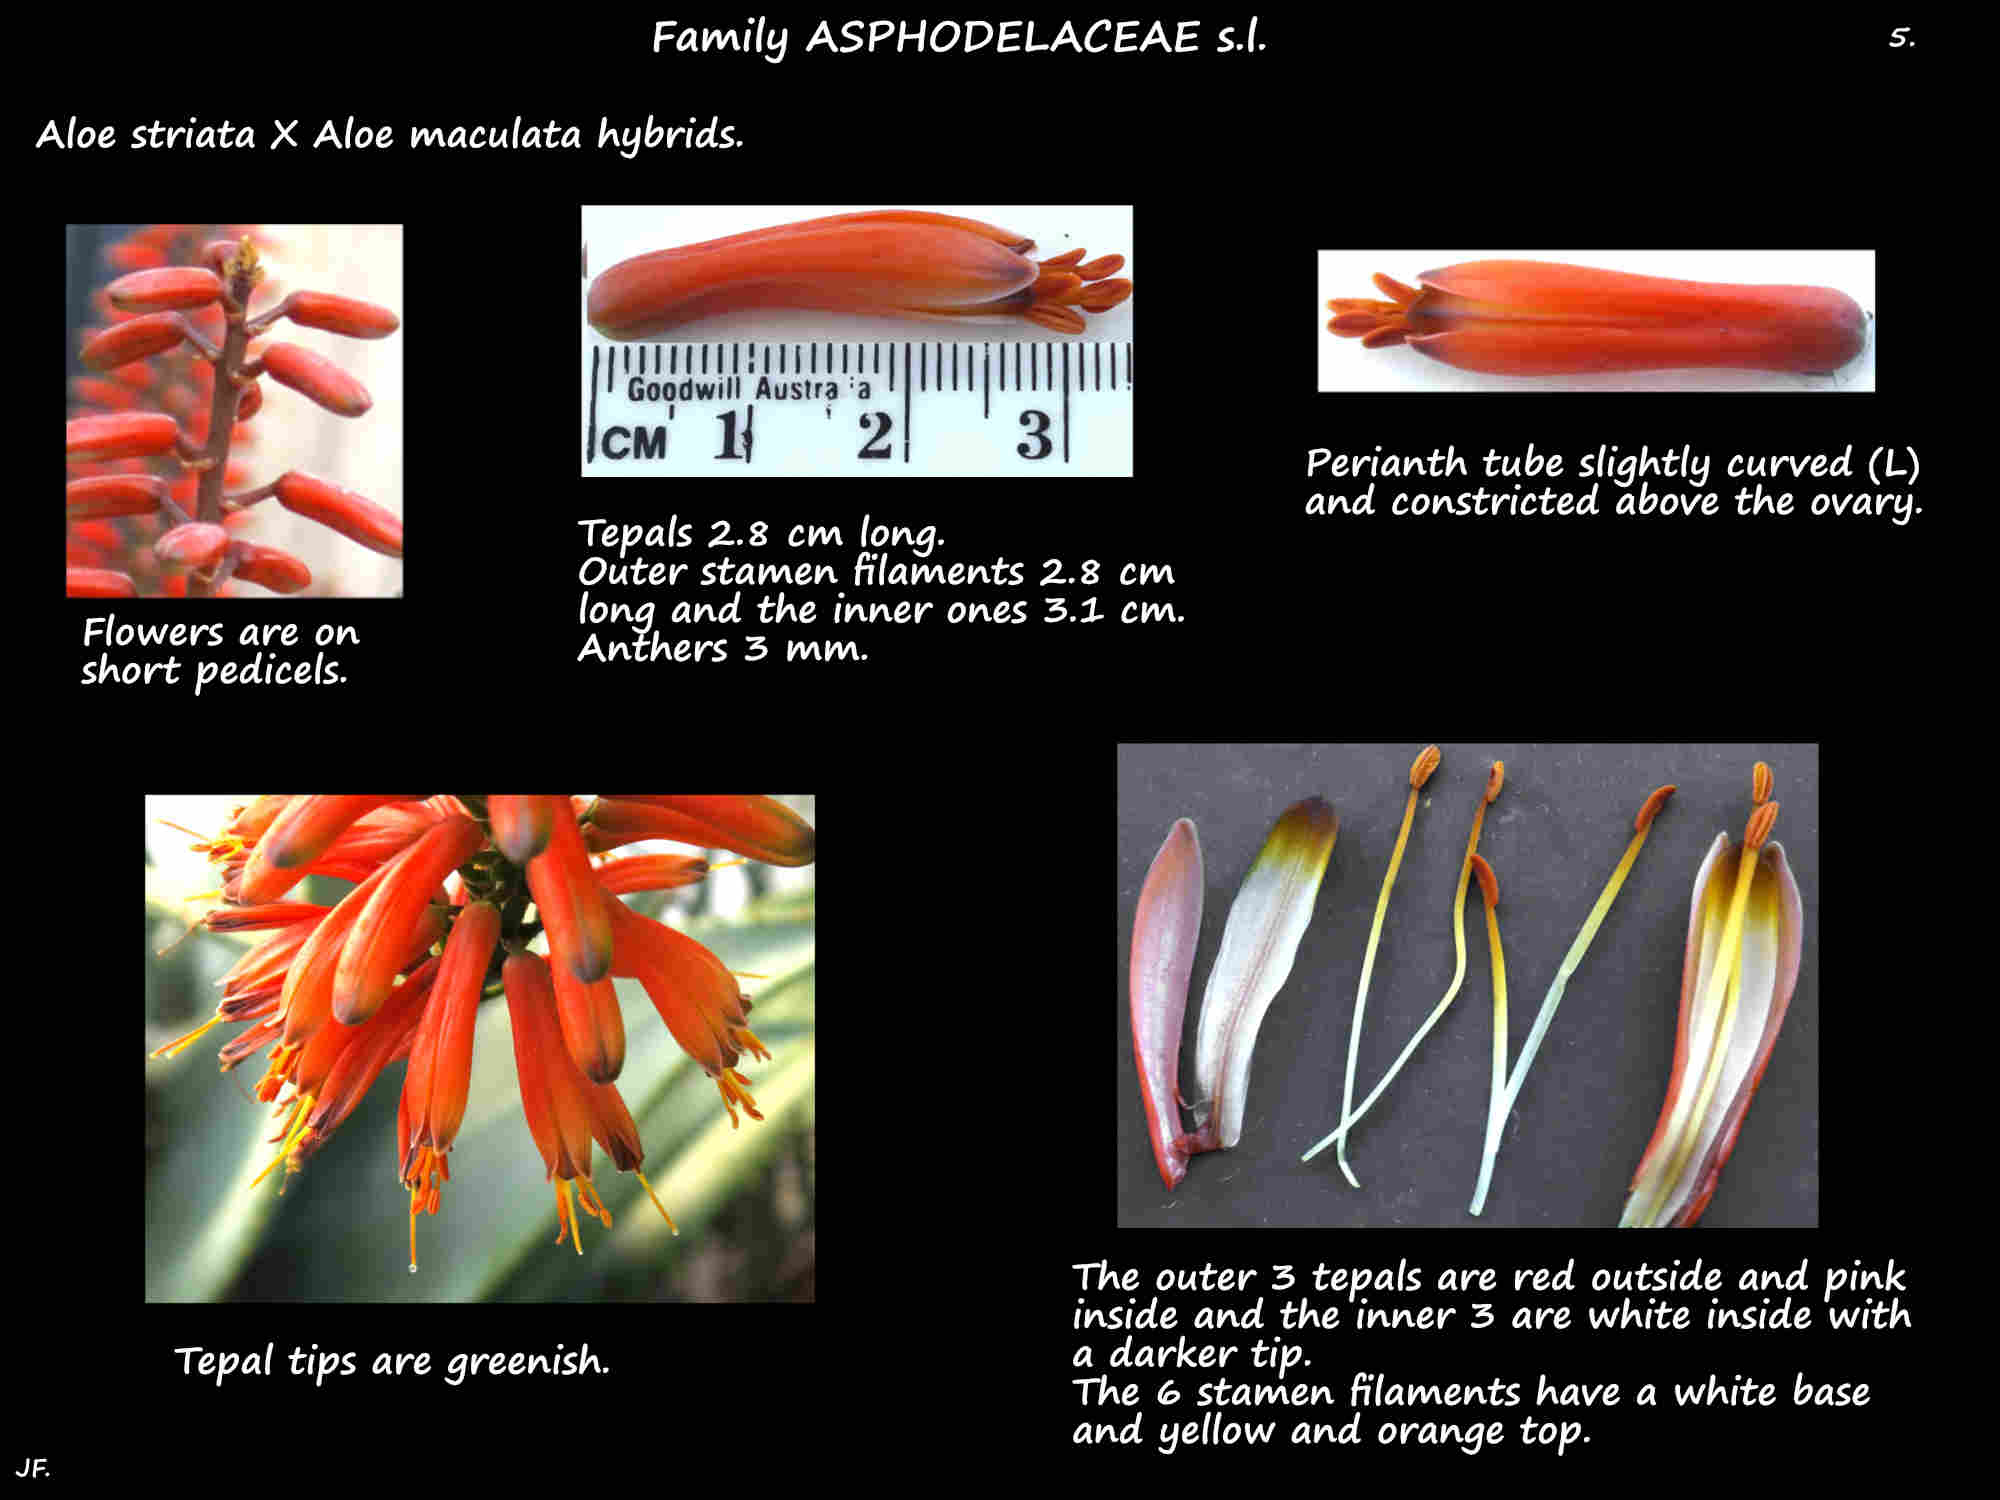 5 The tepals of Aloe striata hybrid flowers